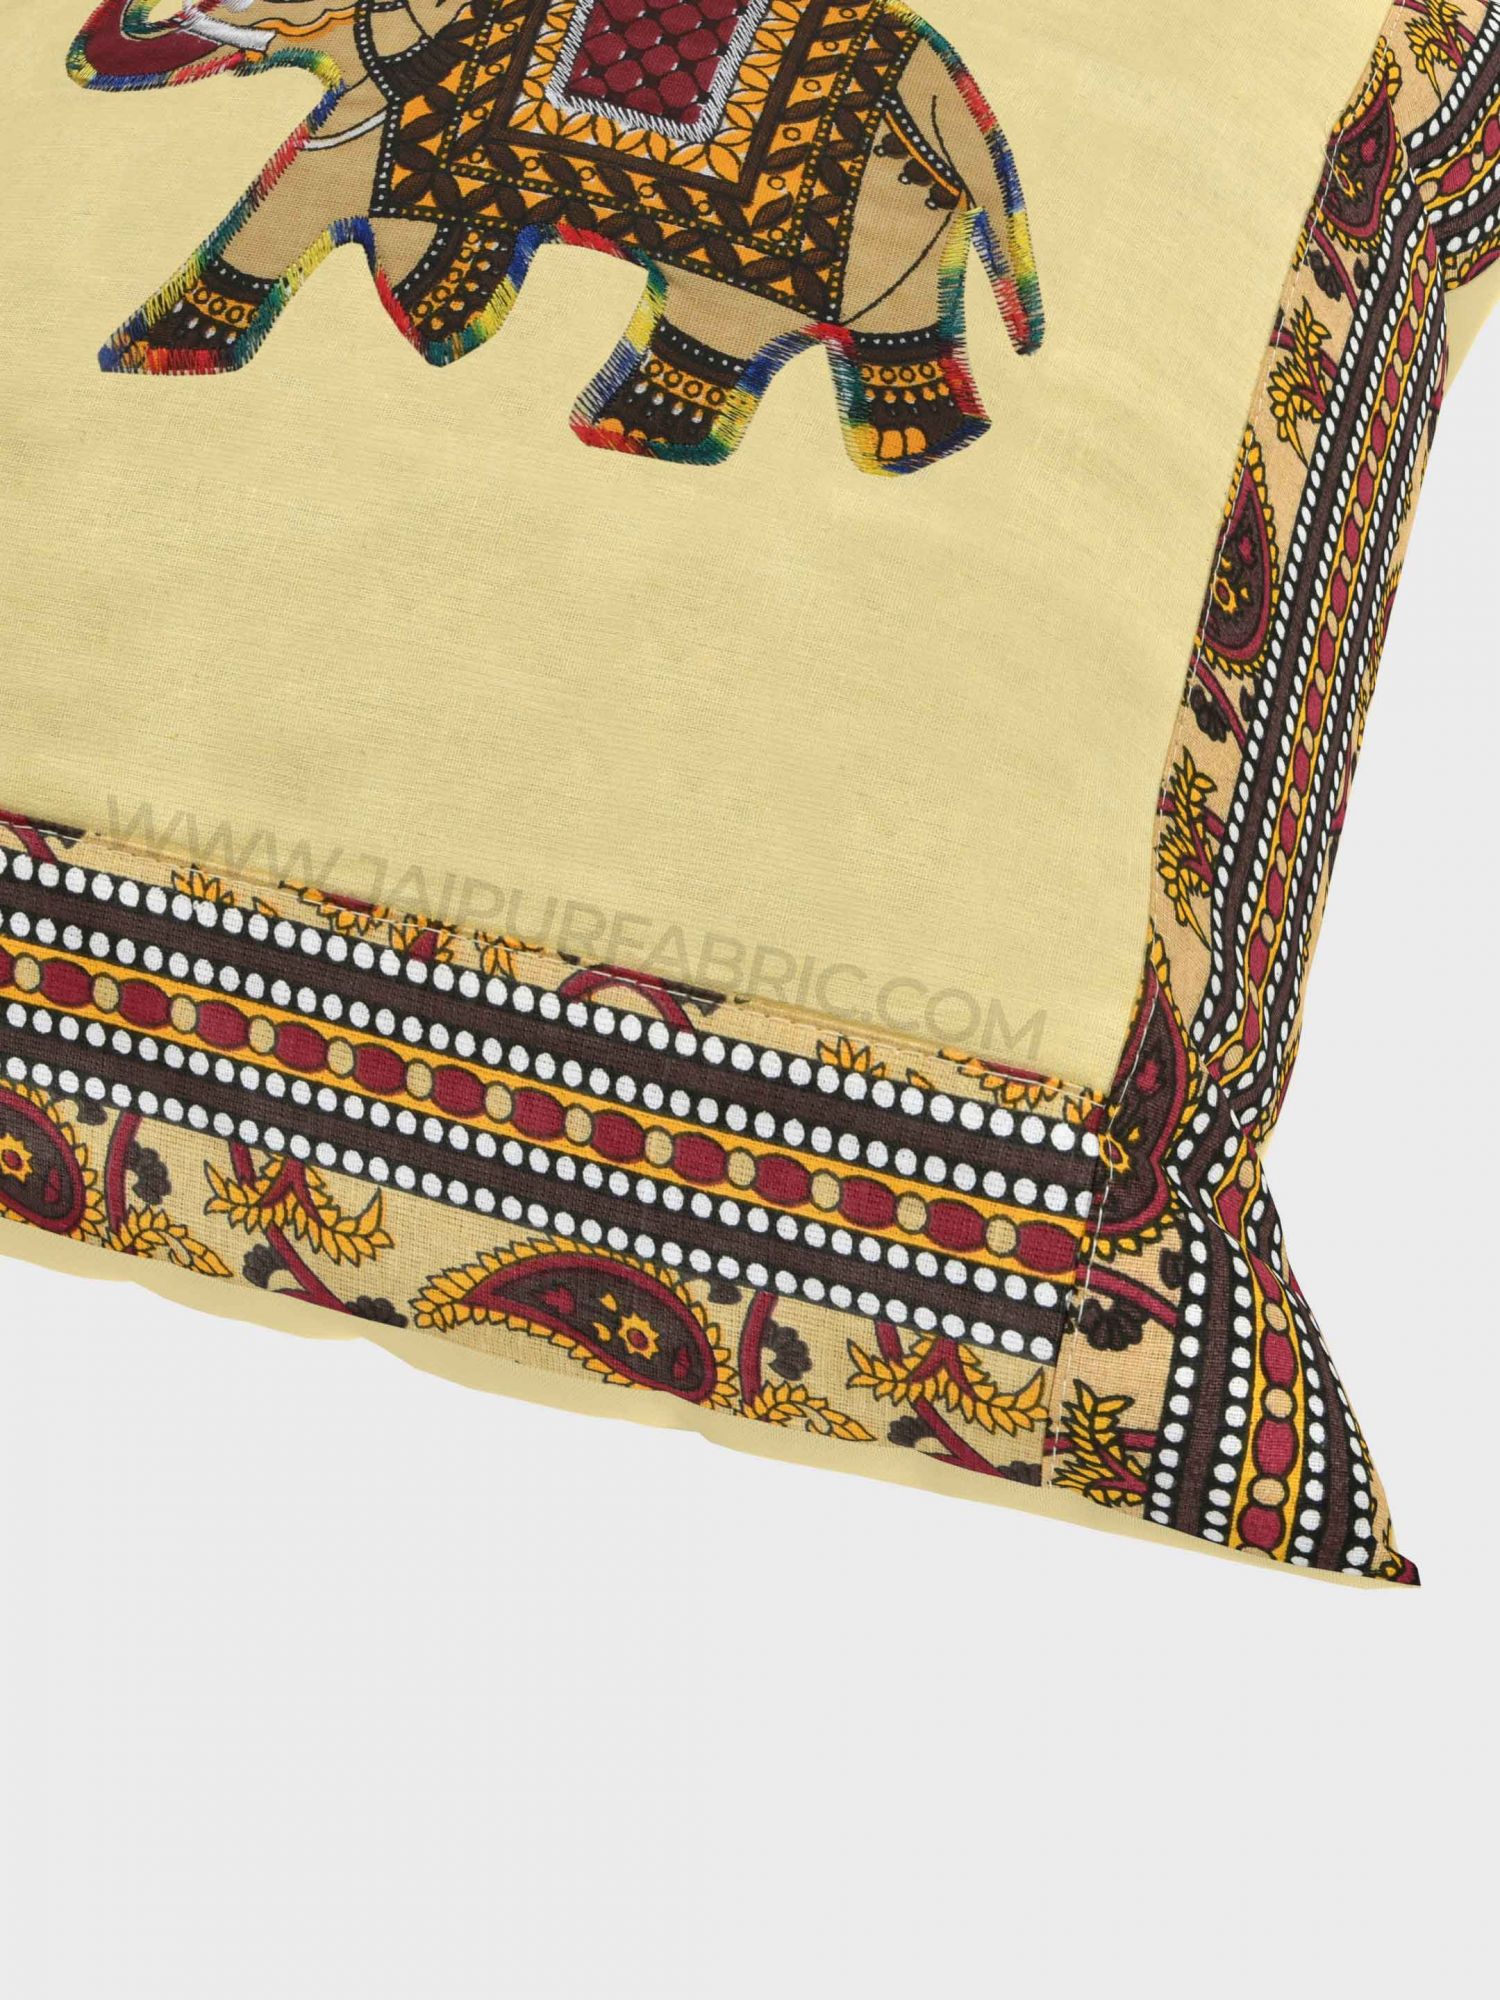 Applique Cream Elephant Jaipuri Hand Made Embroidery Patch Work Cushion Cover